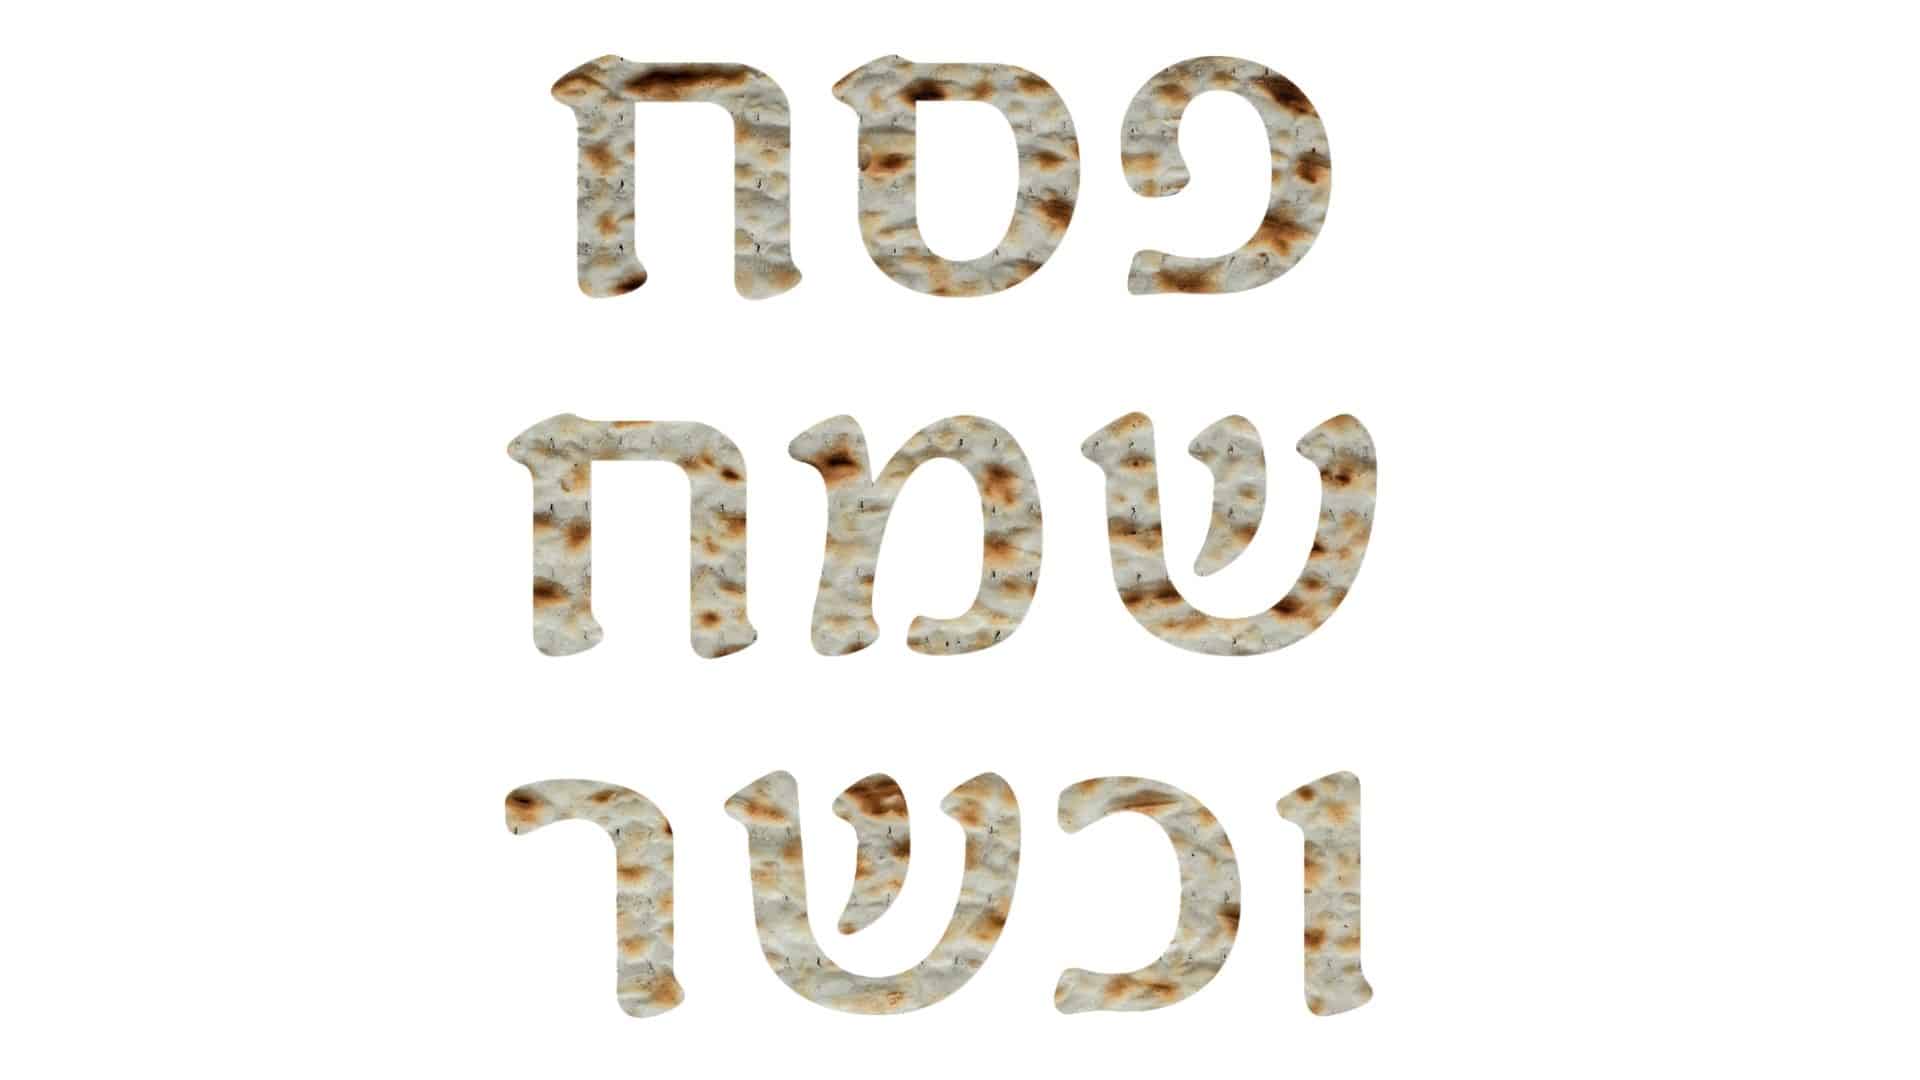 Learn Passover Greetings in English, Hebrew & Yiddish B'nai Mitzvah